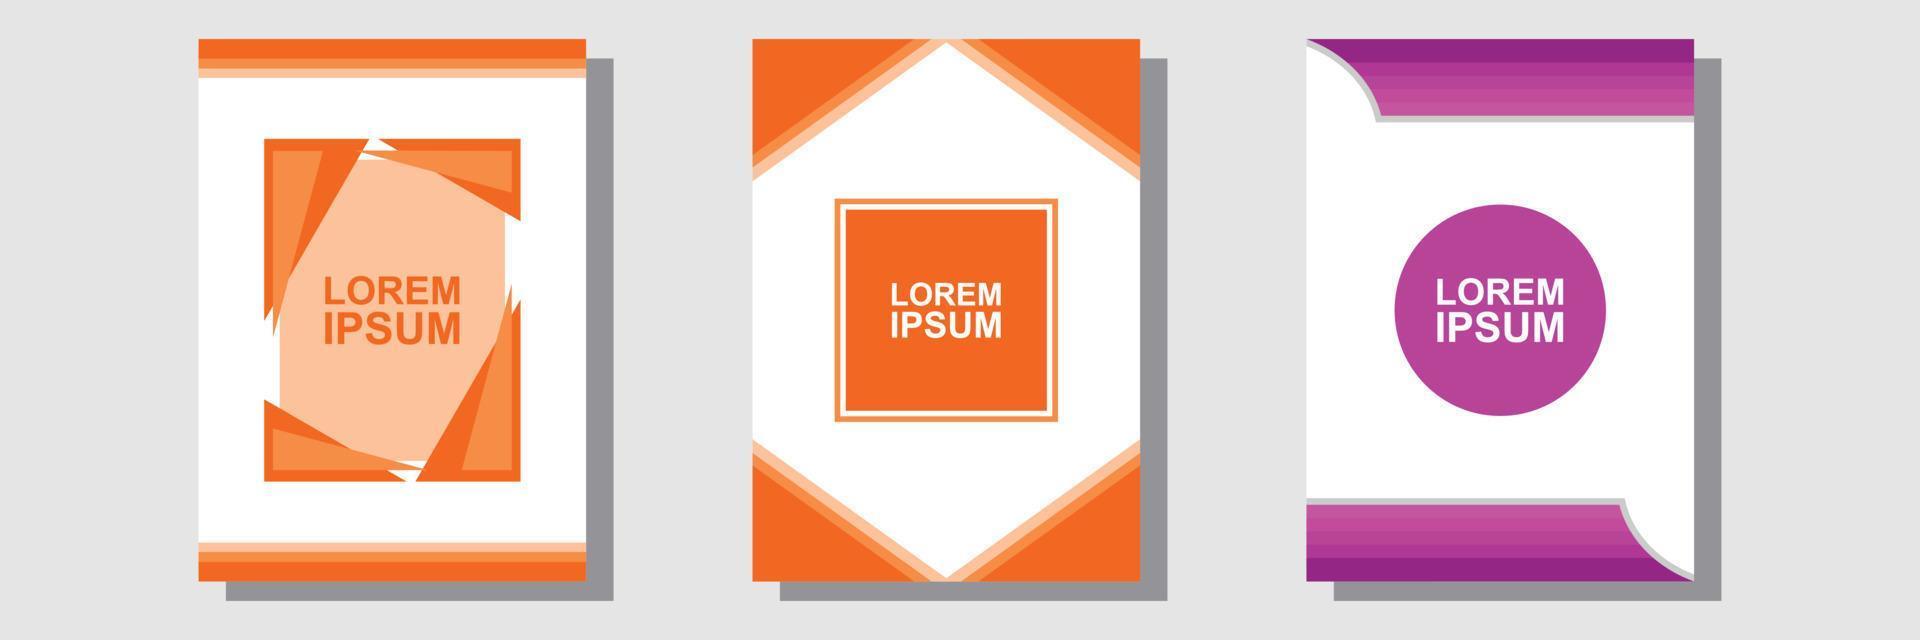 Modern abstrack cover design, background, flyer vector